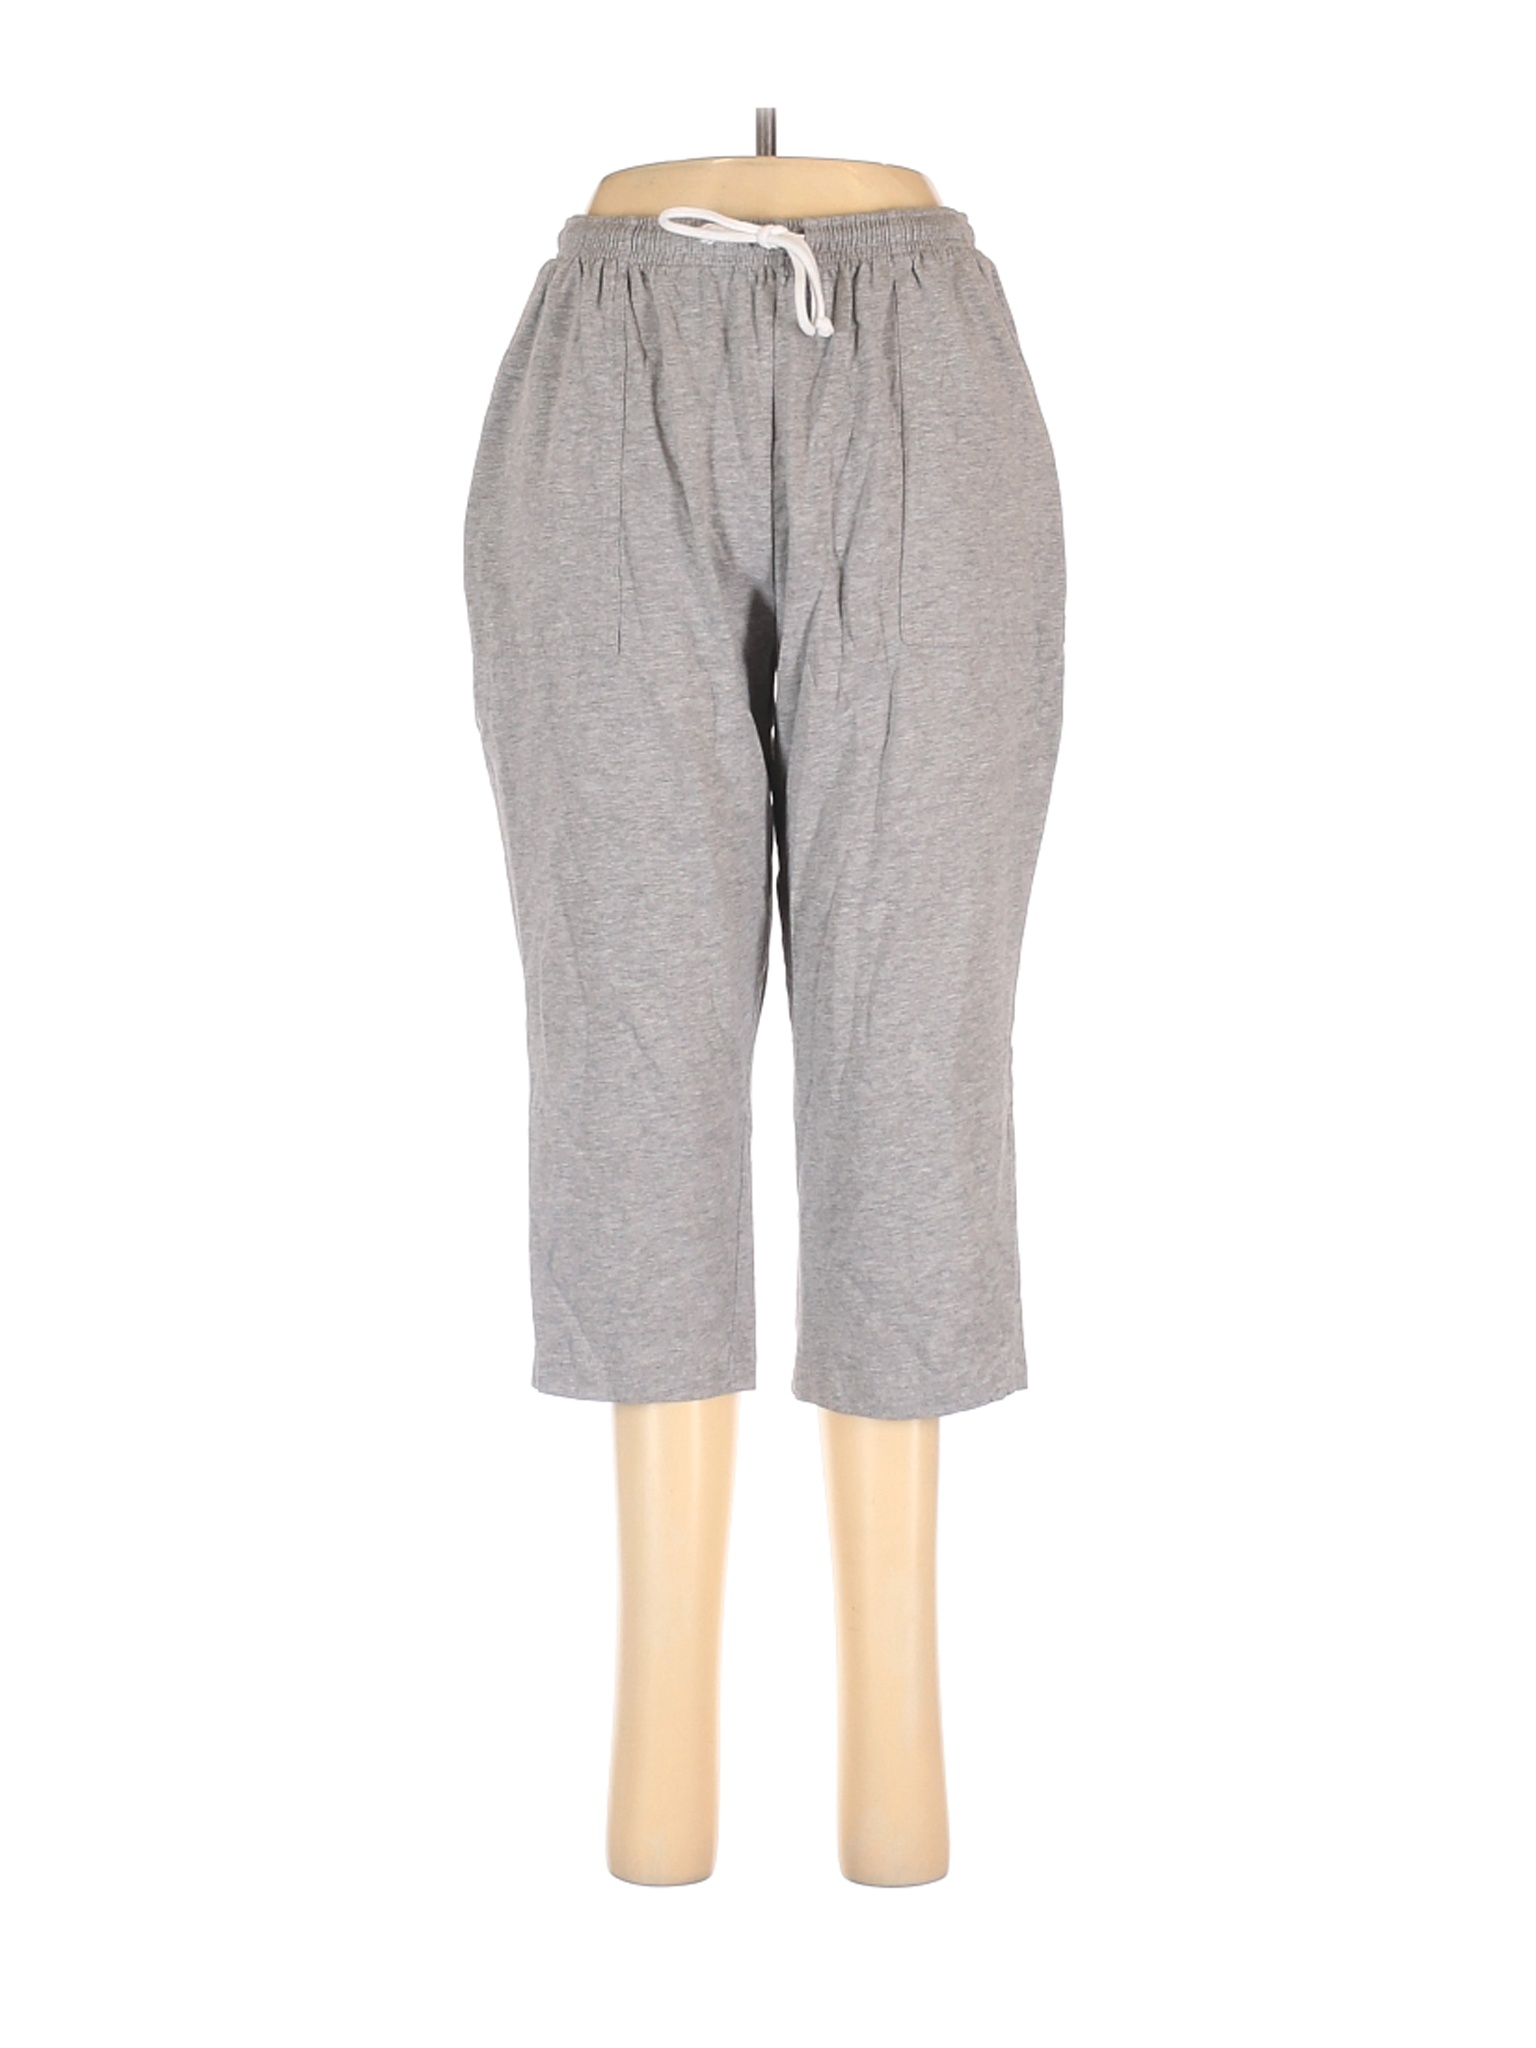 Blair Women Gray Casual Pants M Petites | eBay